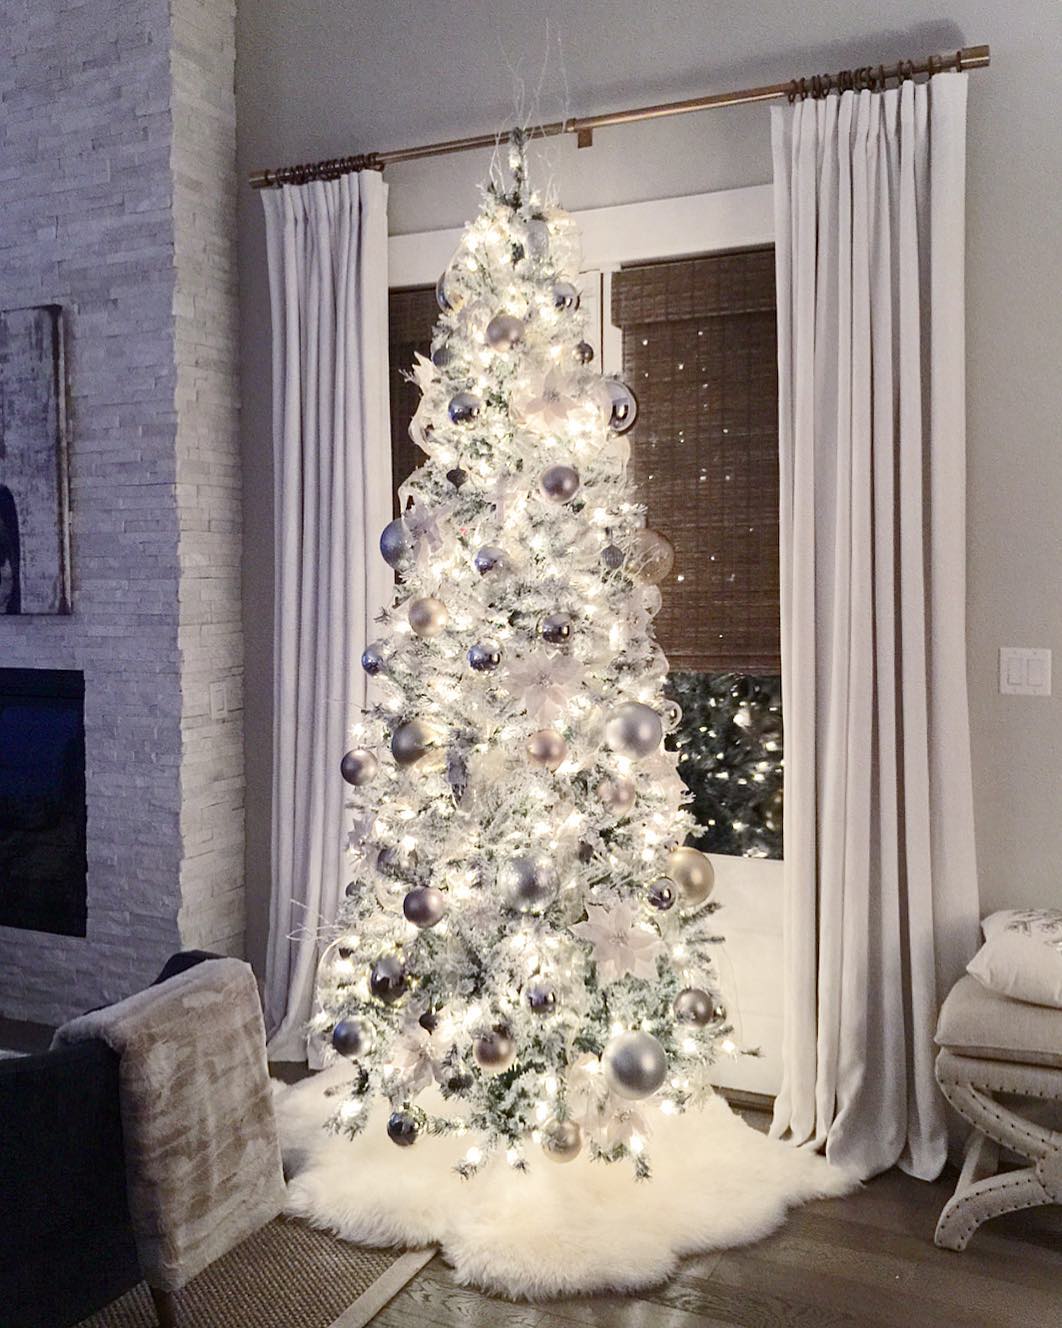 Top 12 beautiful Christmas tree decorations  Gazzed